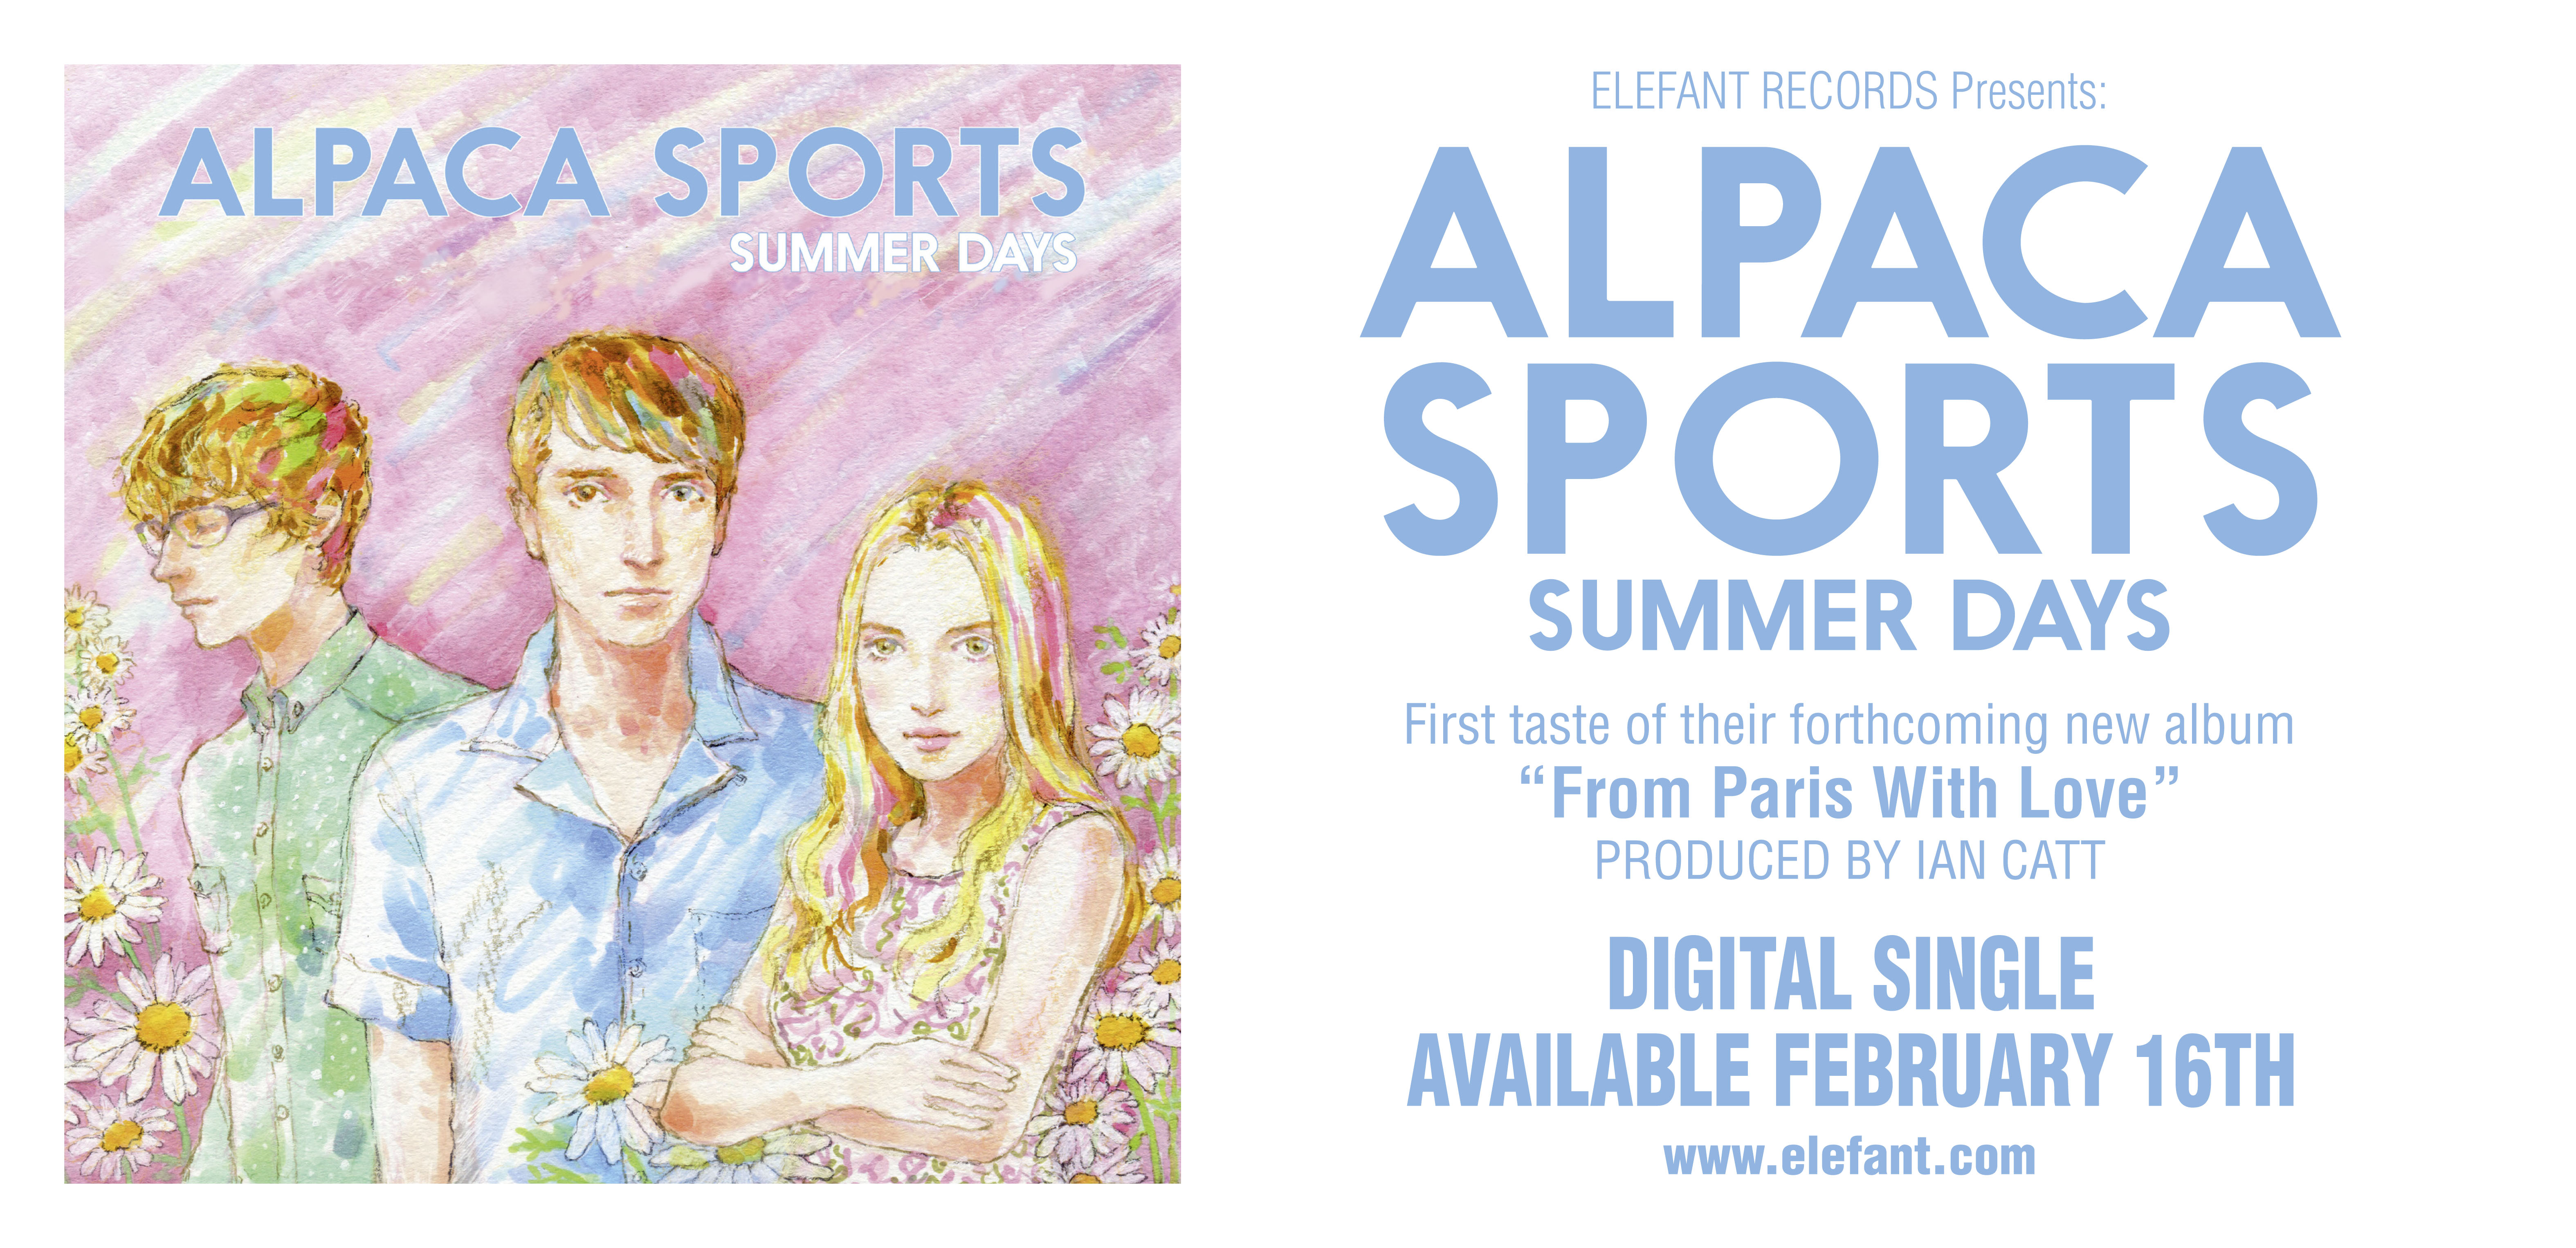 Alpaca Sports "Summer Days" Single Digital